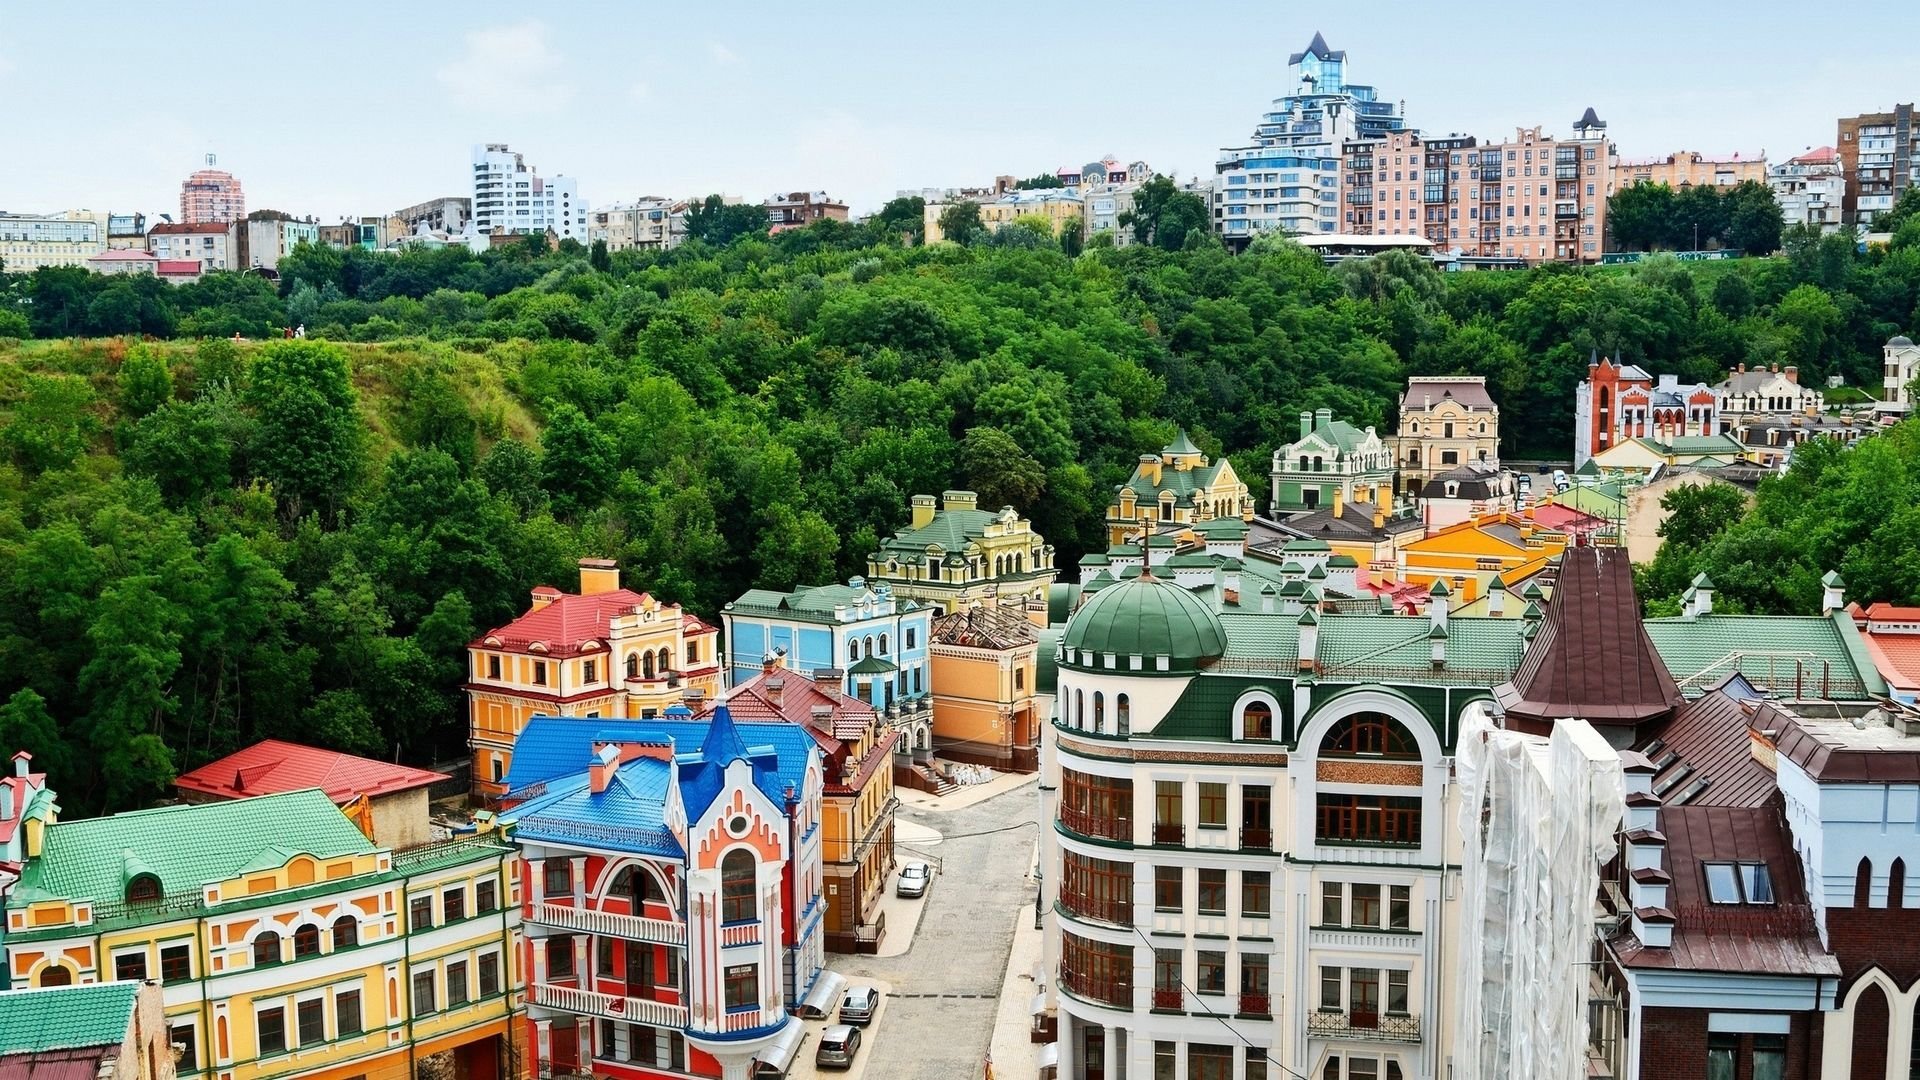 Download Ukraine Forest Tree House City Man Made Kiev  HD Wallpaper